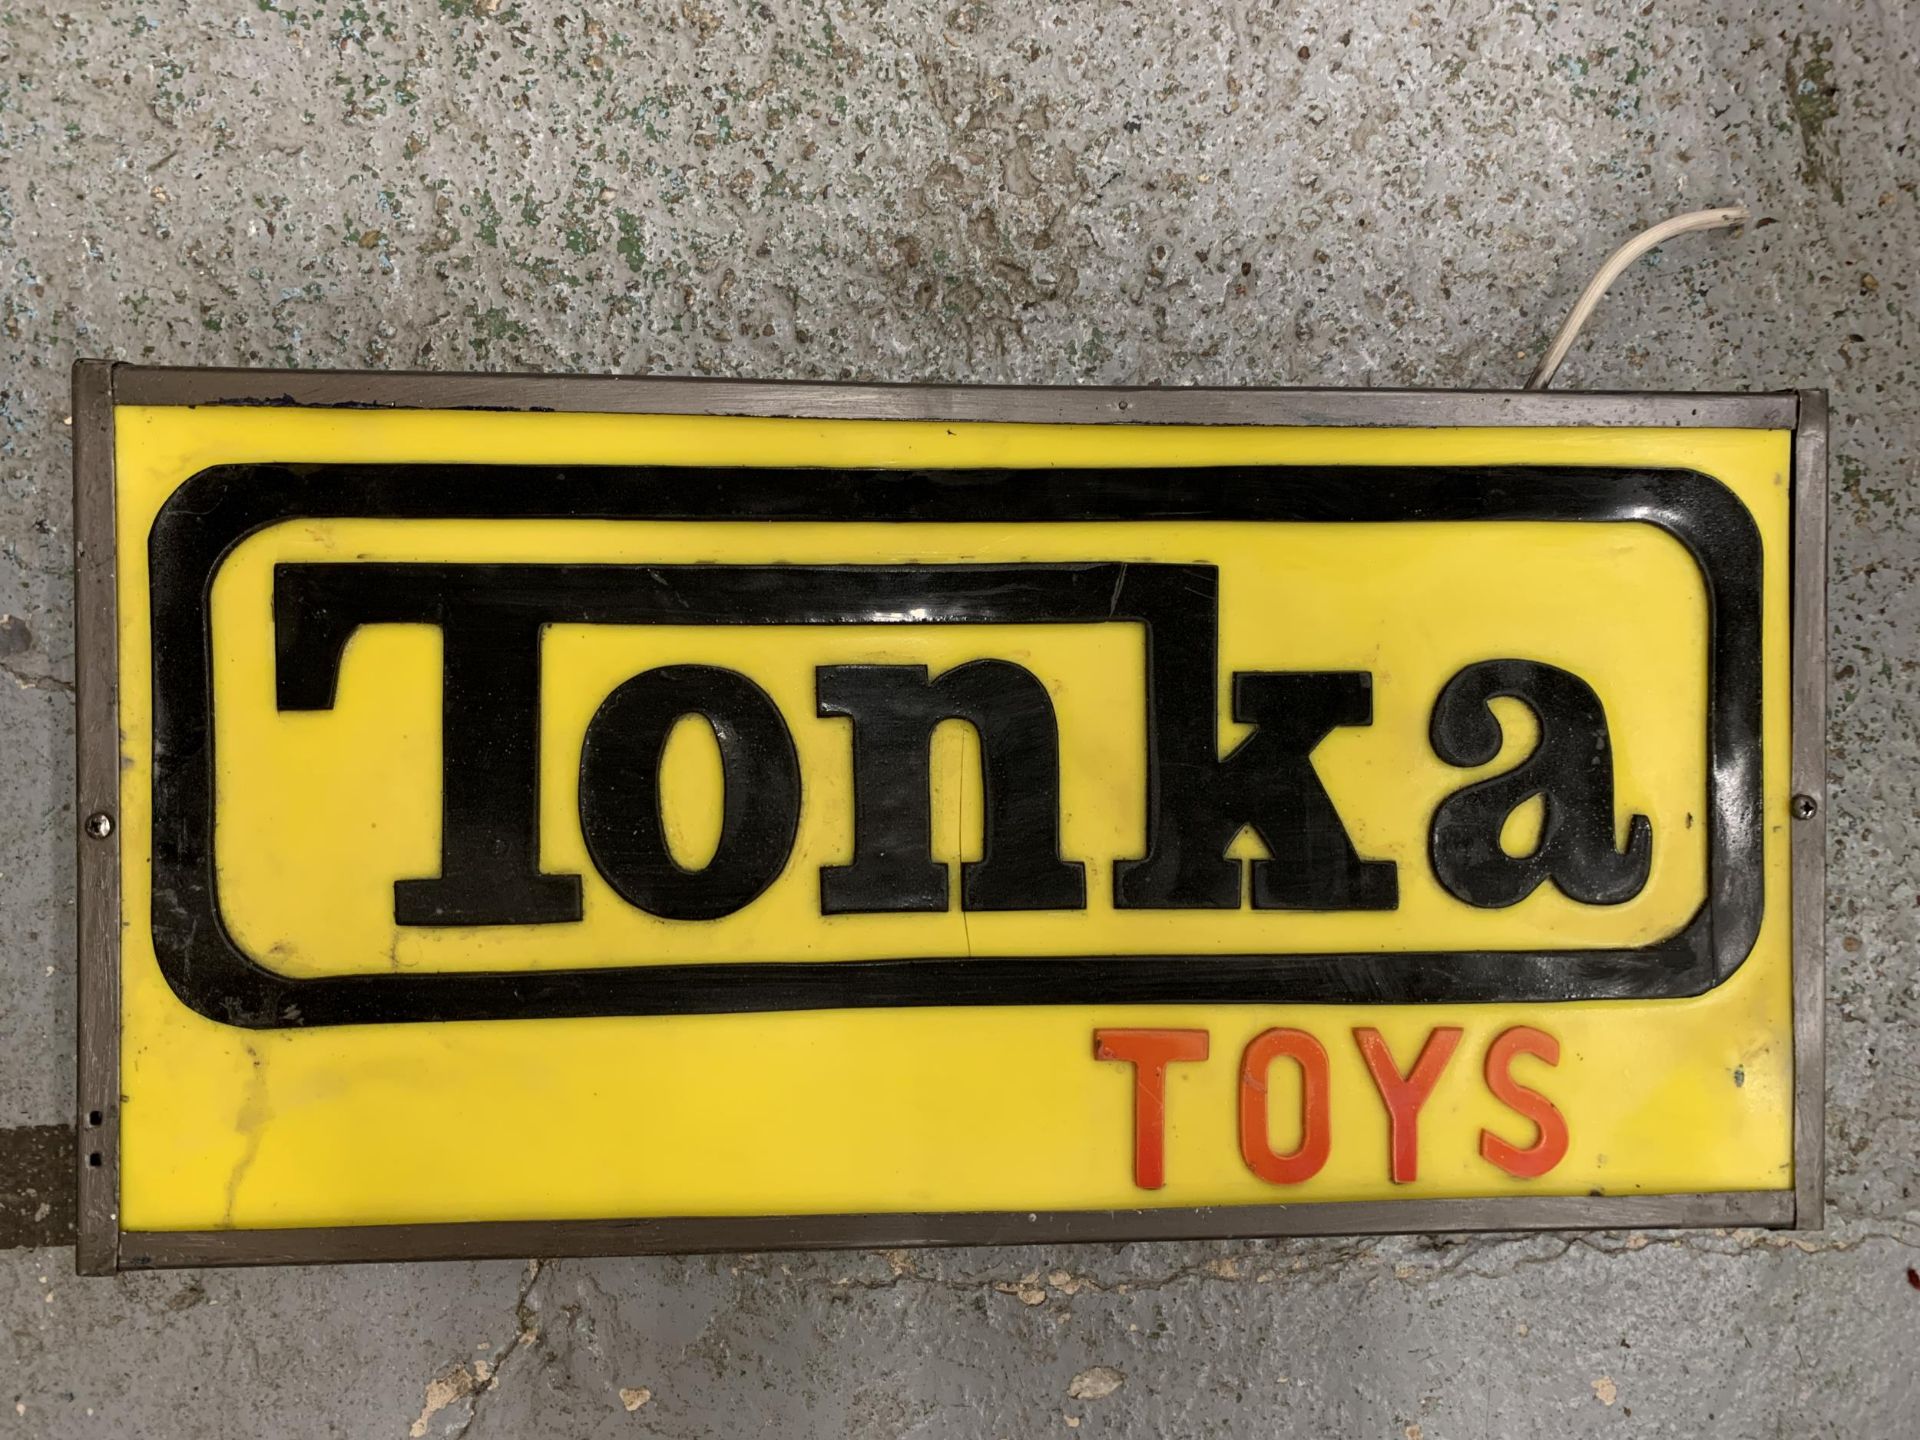 A TONKA TOYS ILLUMINATED LIGHT BOX SIGN 63CM X 32CM